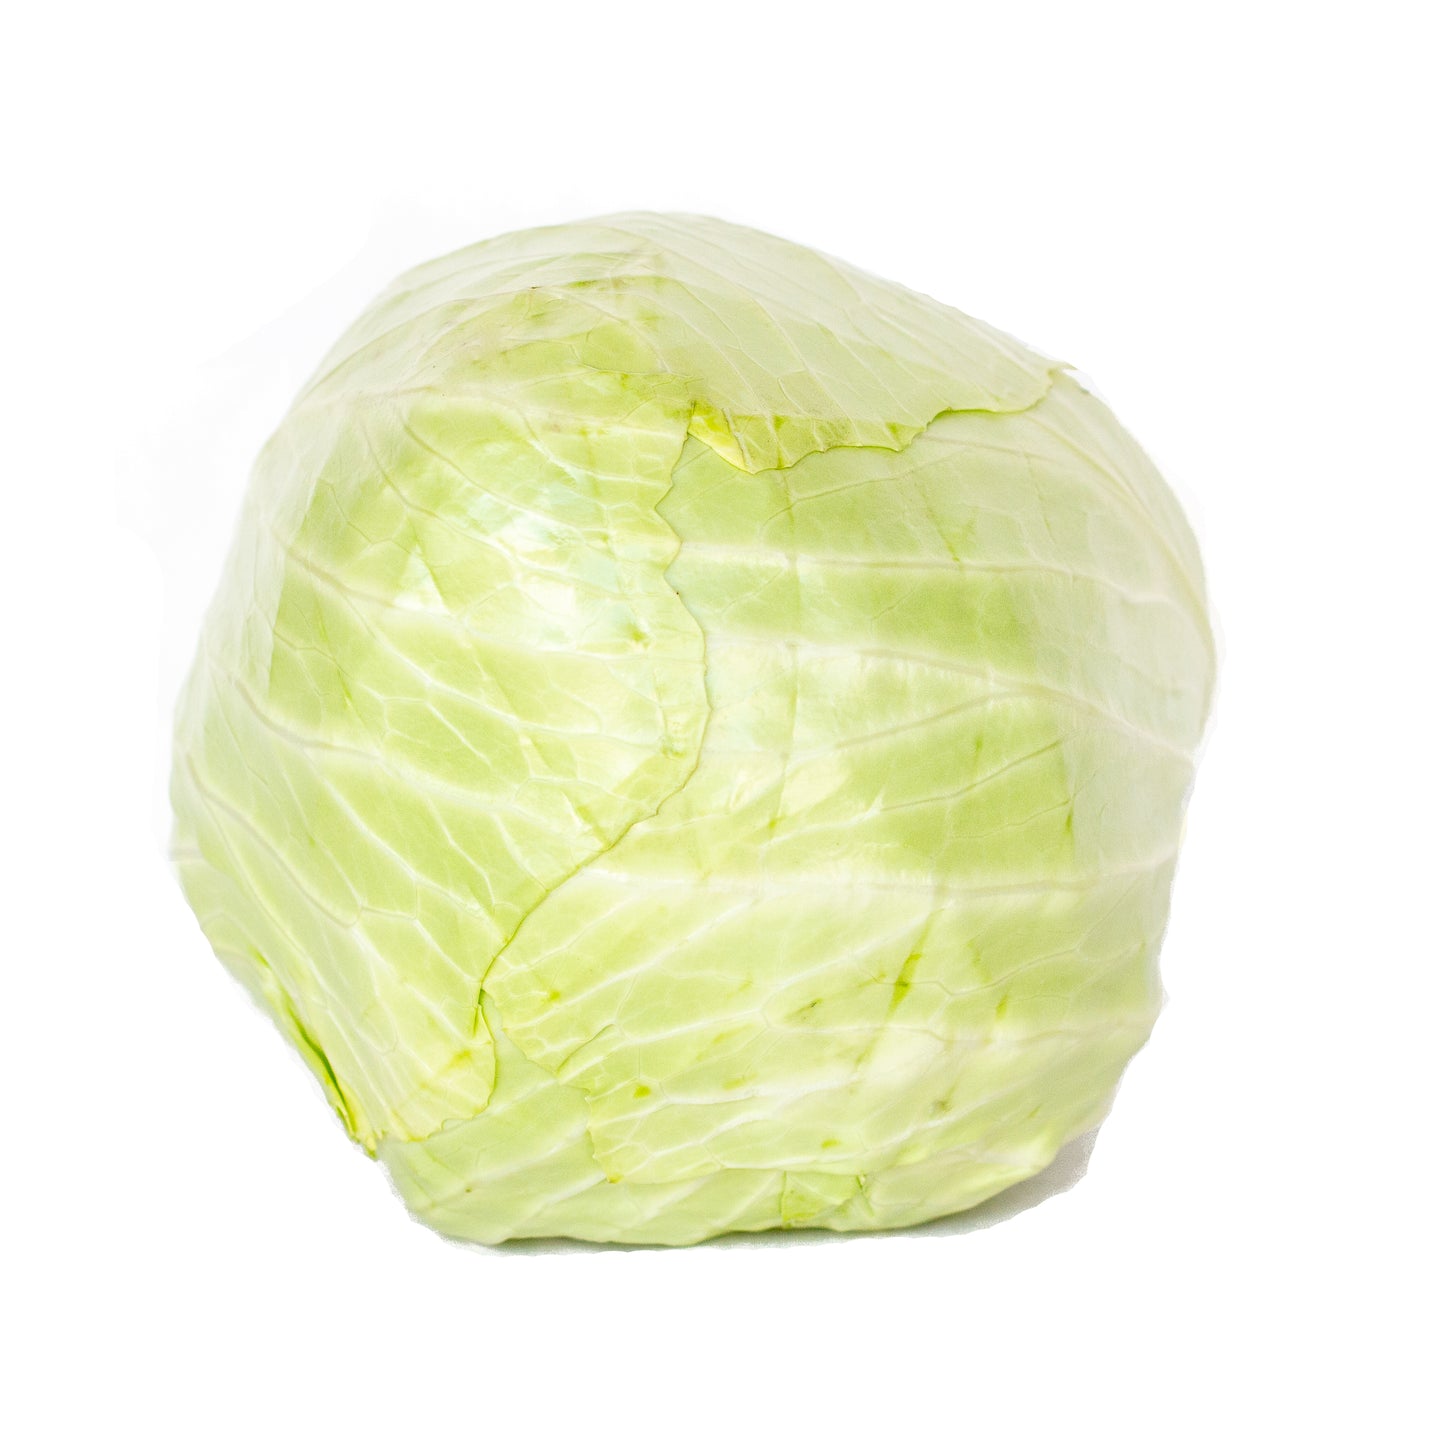 116)Cabbage 卷心菜 (1 PC)